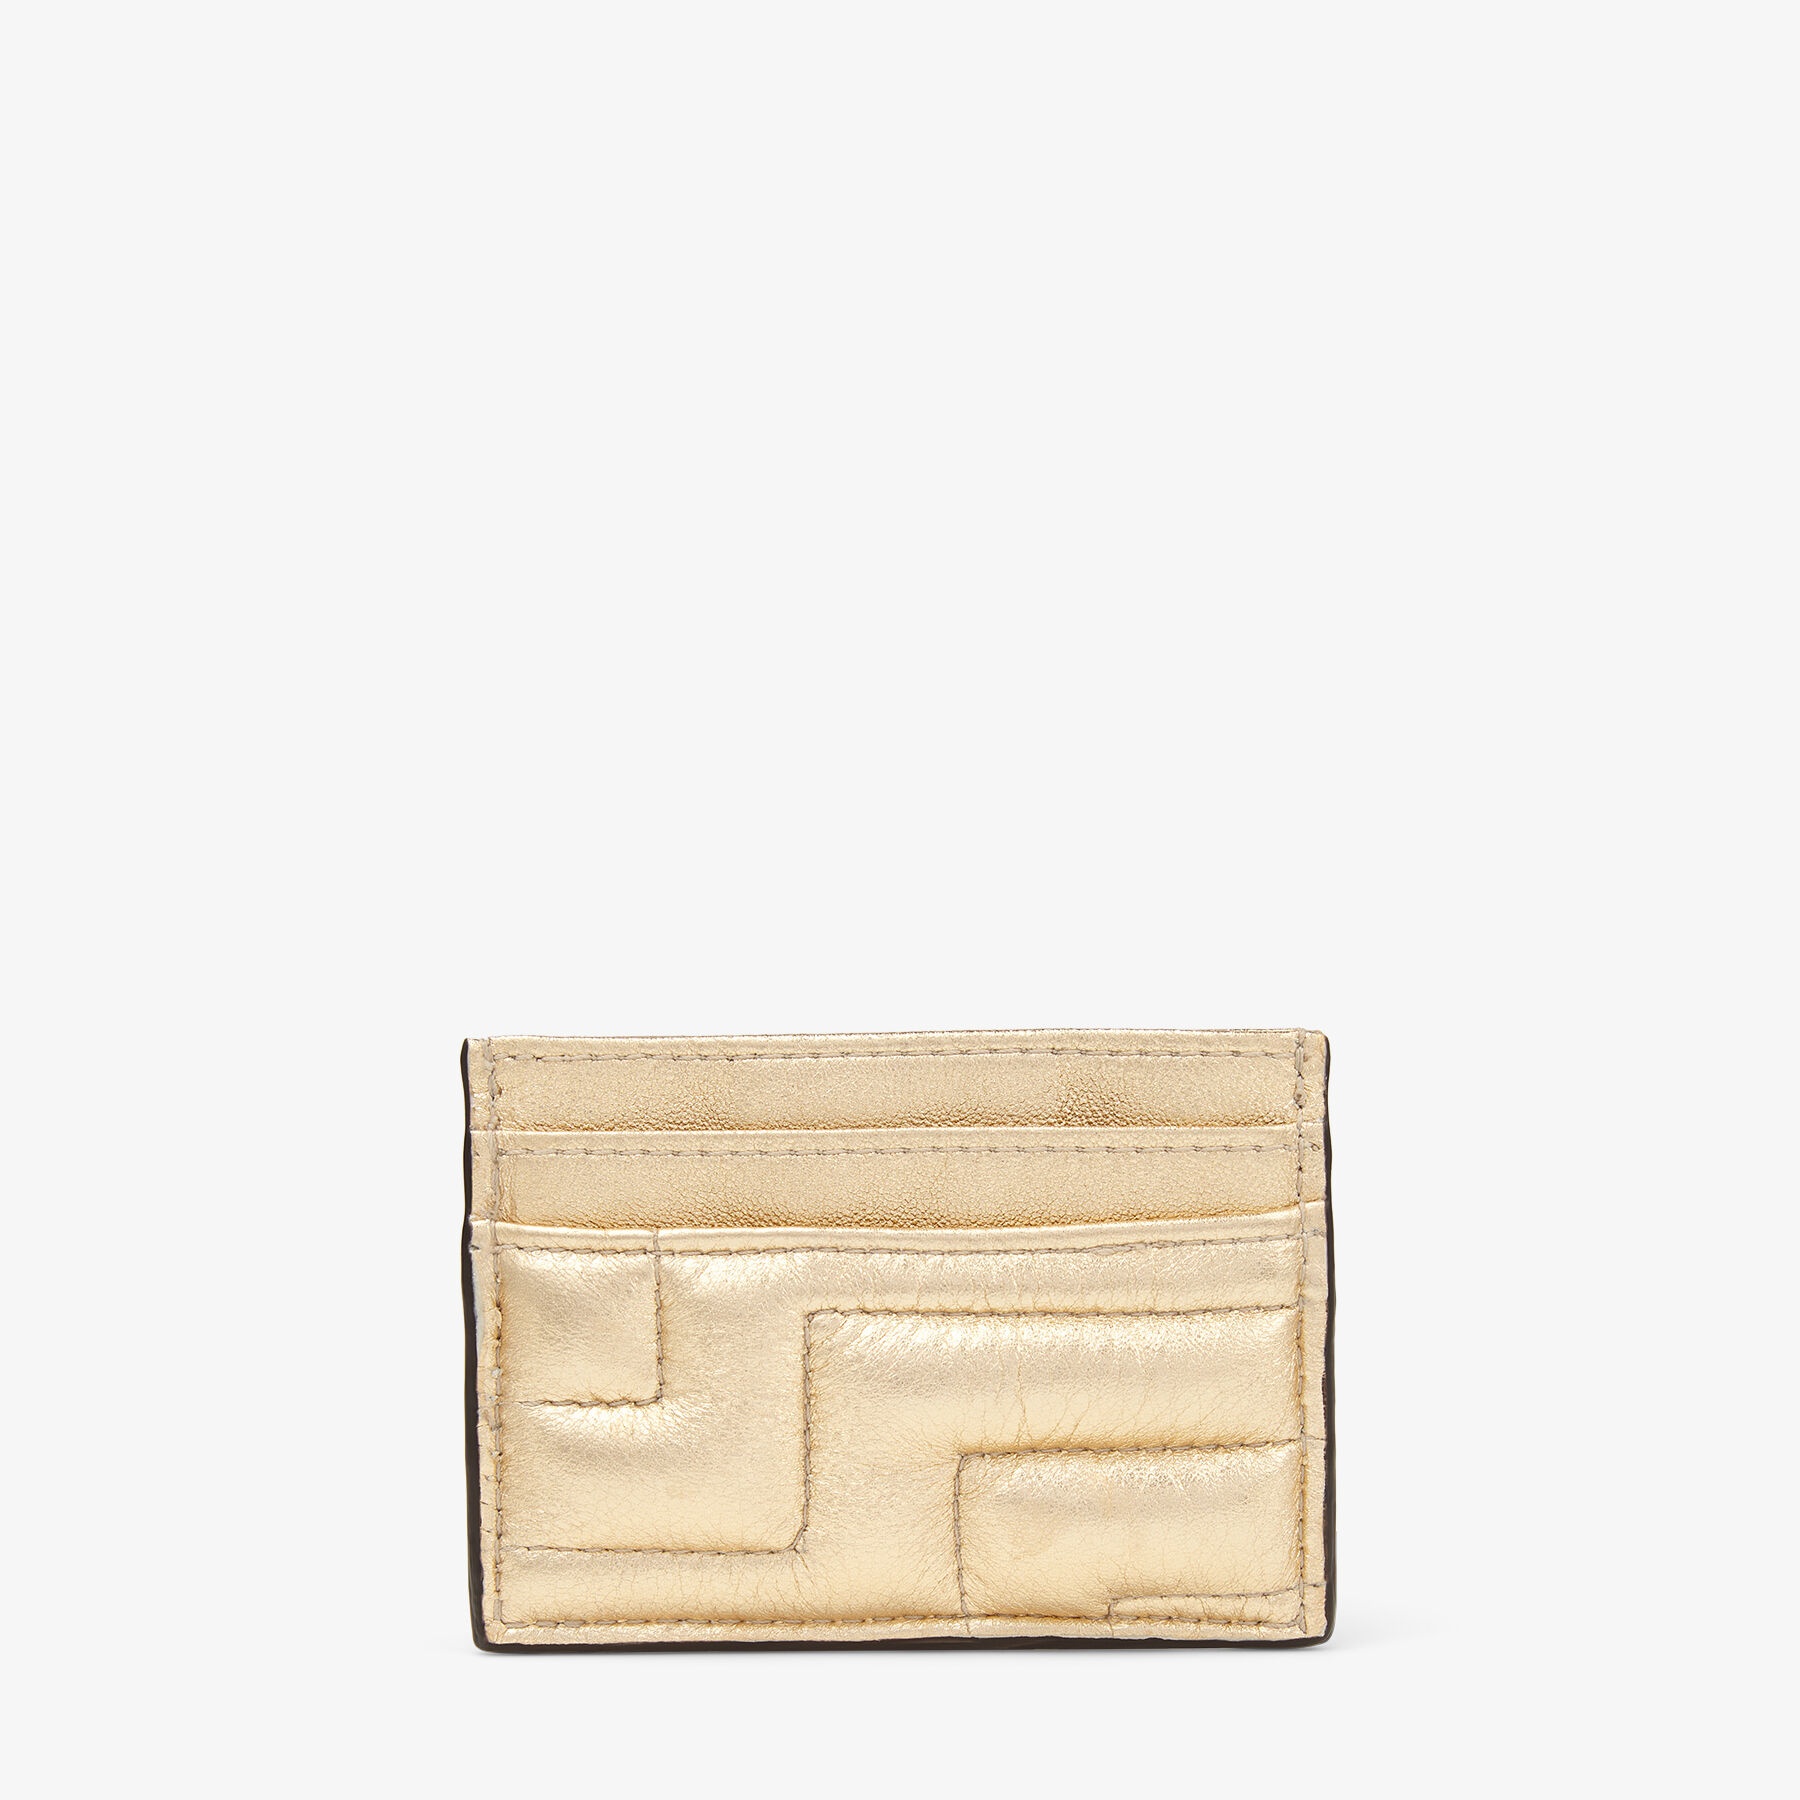 Umika Avenue
Gold Avenue Metallic Nappa Leather Card Holder with JC Emblem - 5